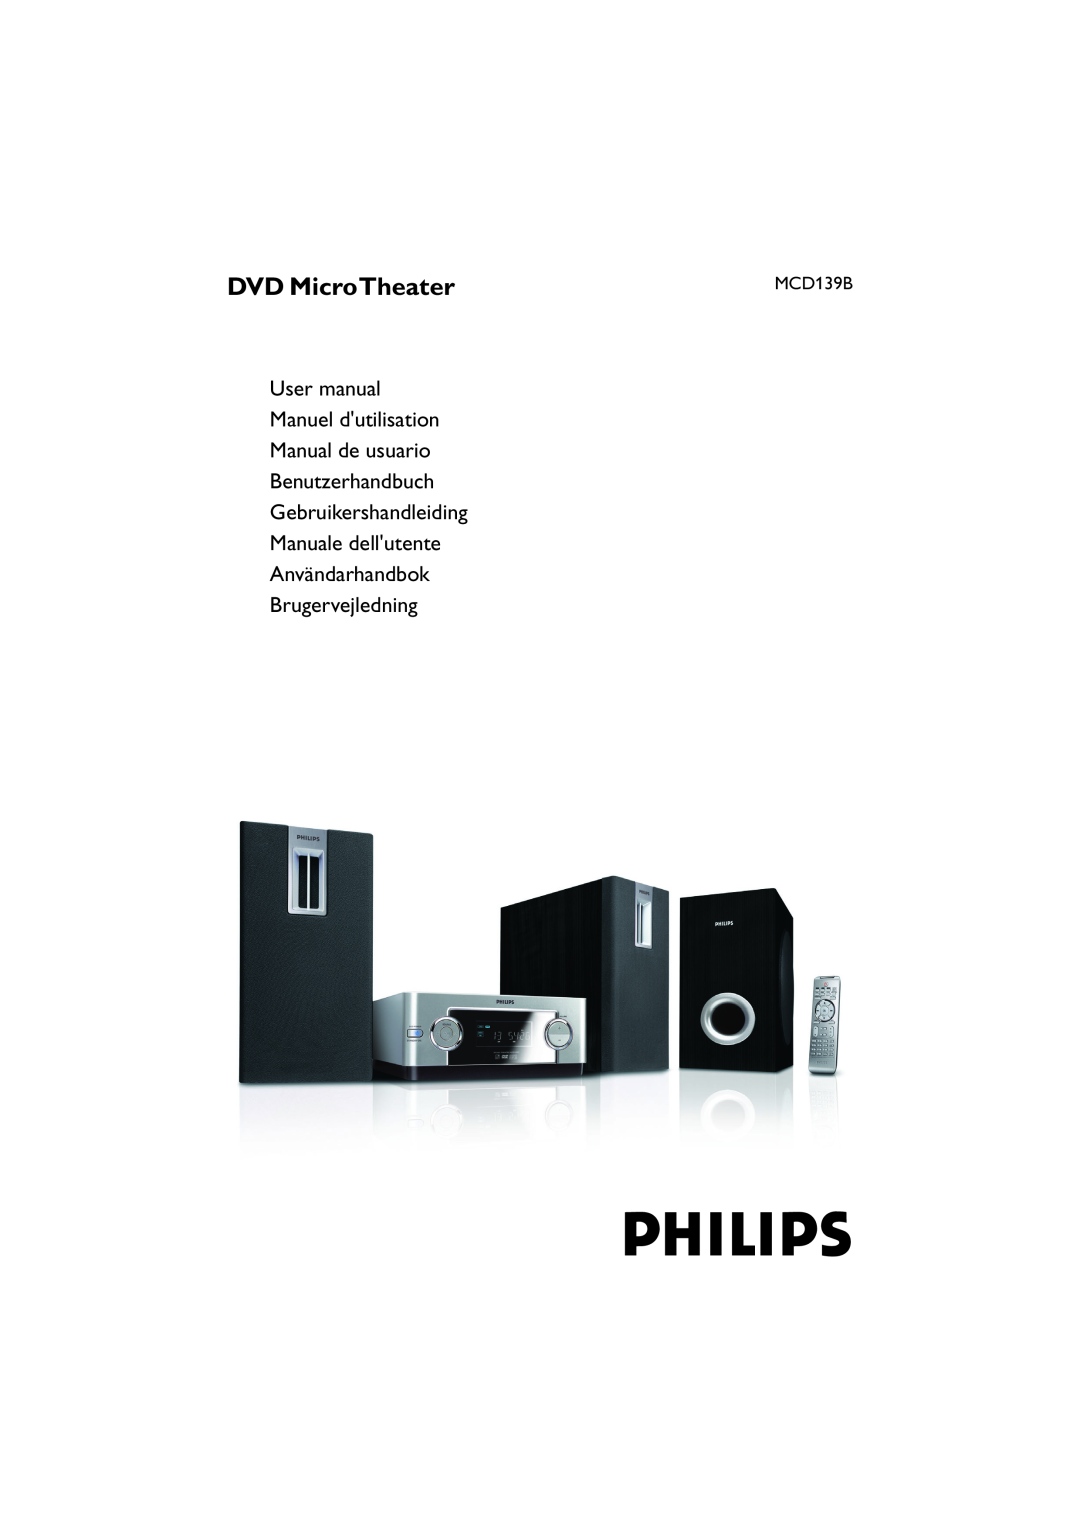 Philips MCD139B owner manual DVD Micro Theatre, Necesita ayuda inmediata?, Need help fast?, Besoin dune aide 